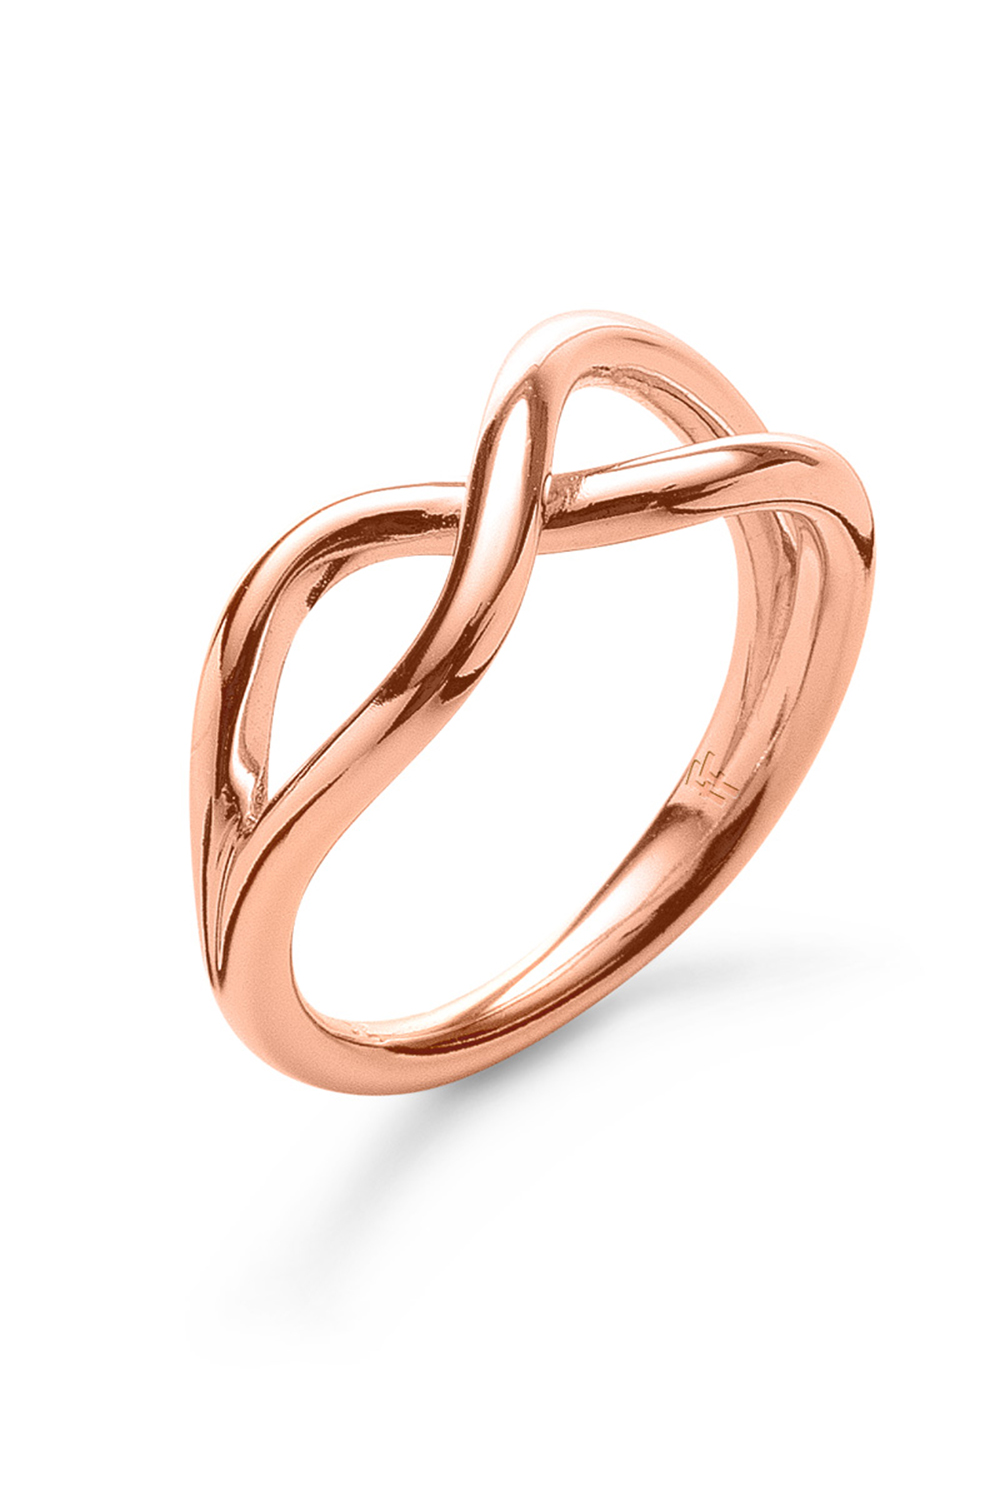 FOLLI FOLLIE – Γυναικειο δαχτυλιδι απο ορειχαλκο FOLLI FOLLIE FLUIDITY ροζ χρυσο